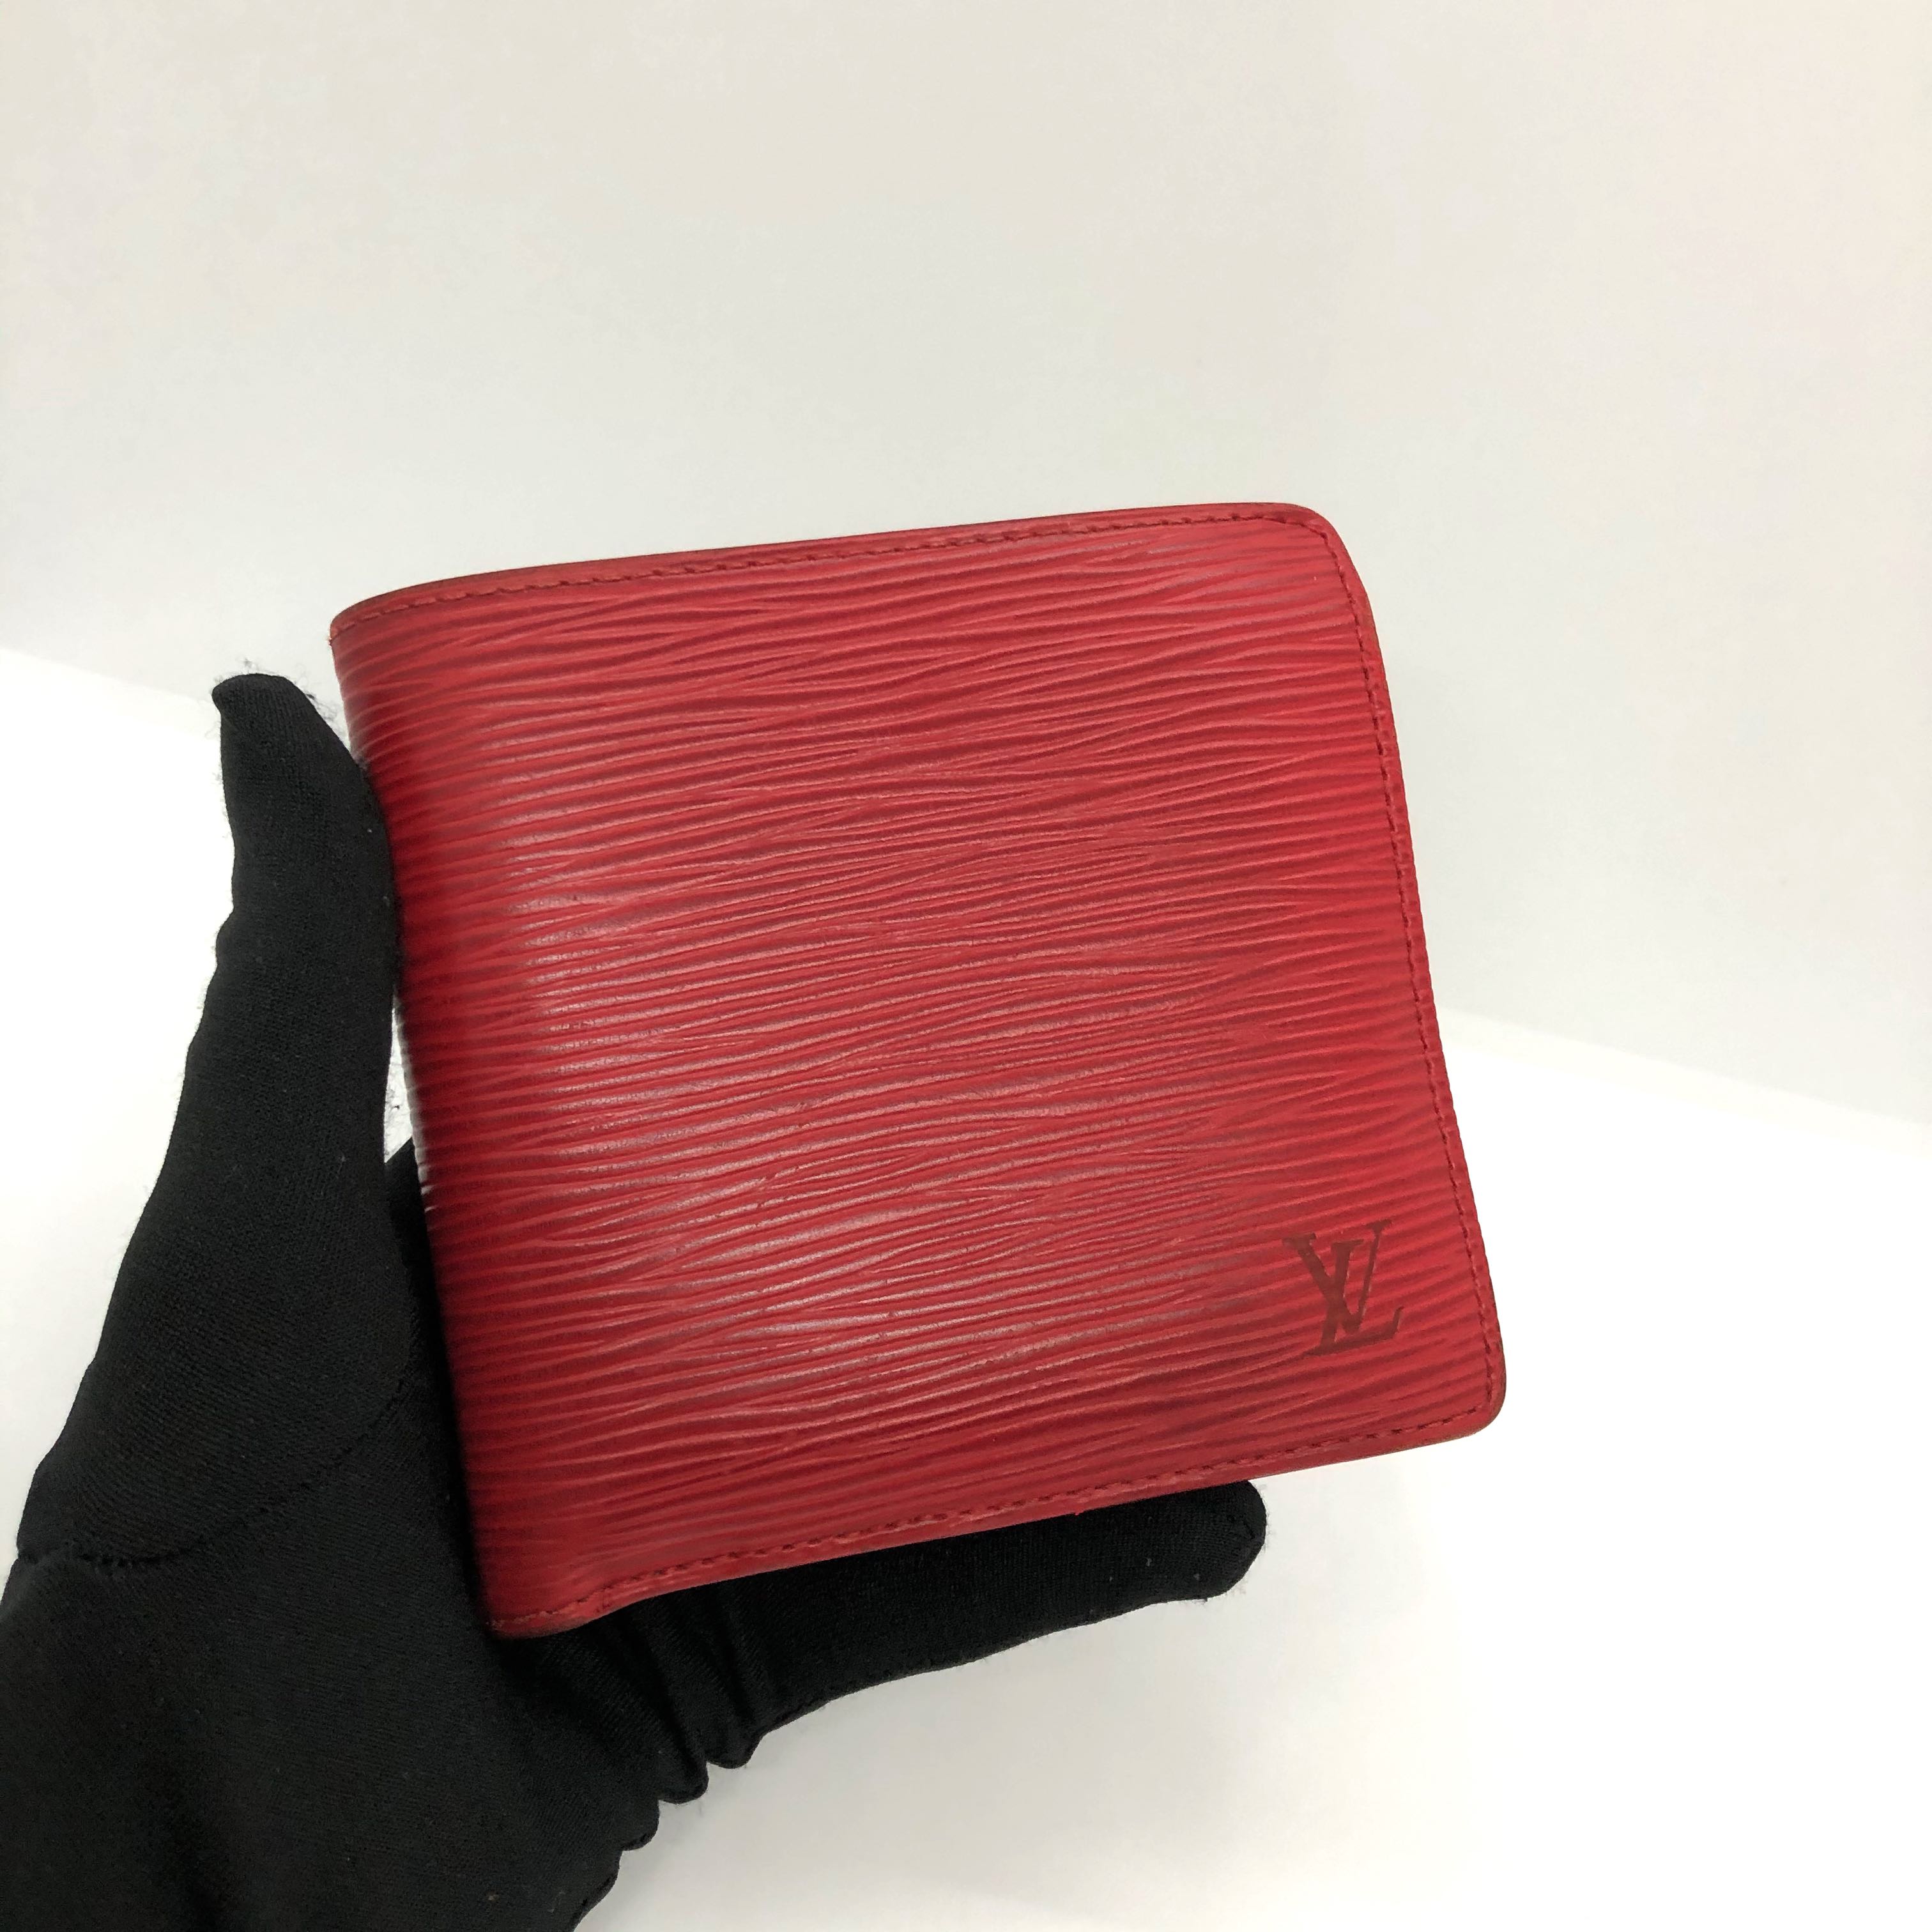 Marco Wallet Epi – Keeks Designer Handbags